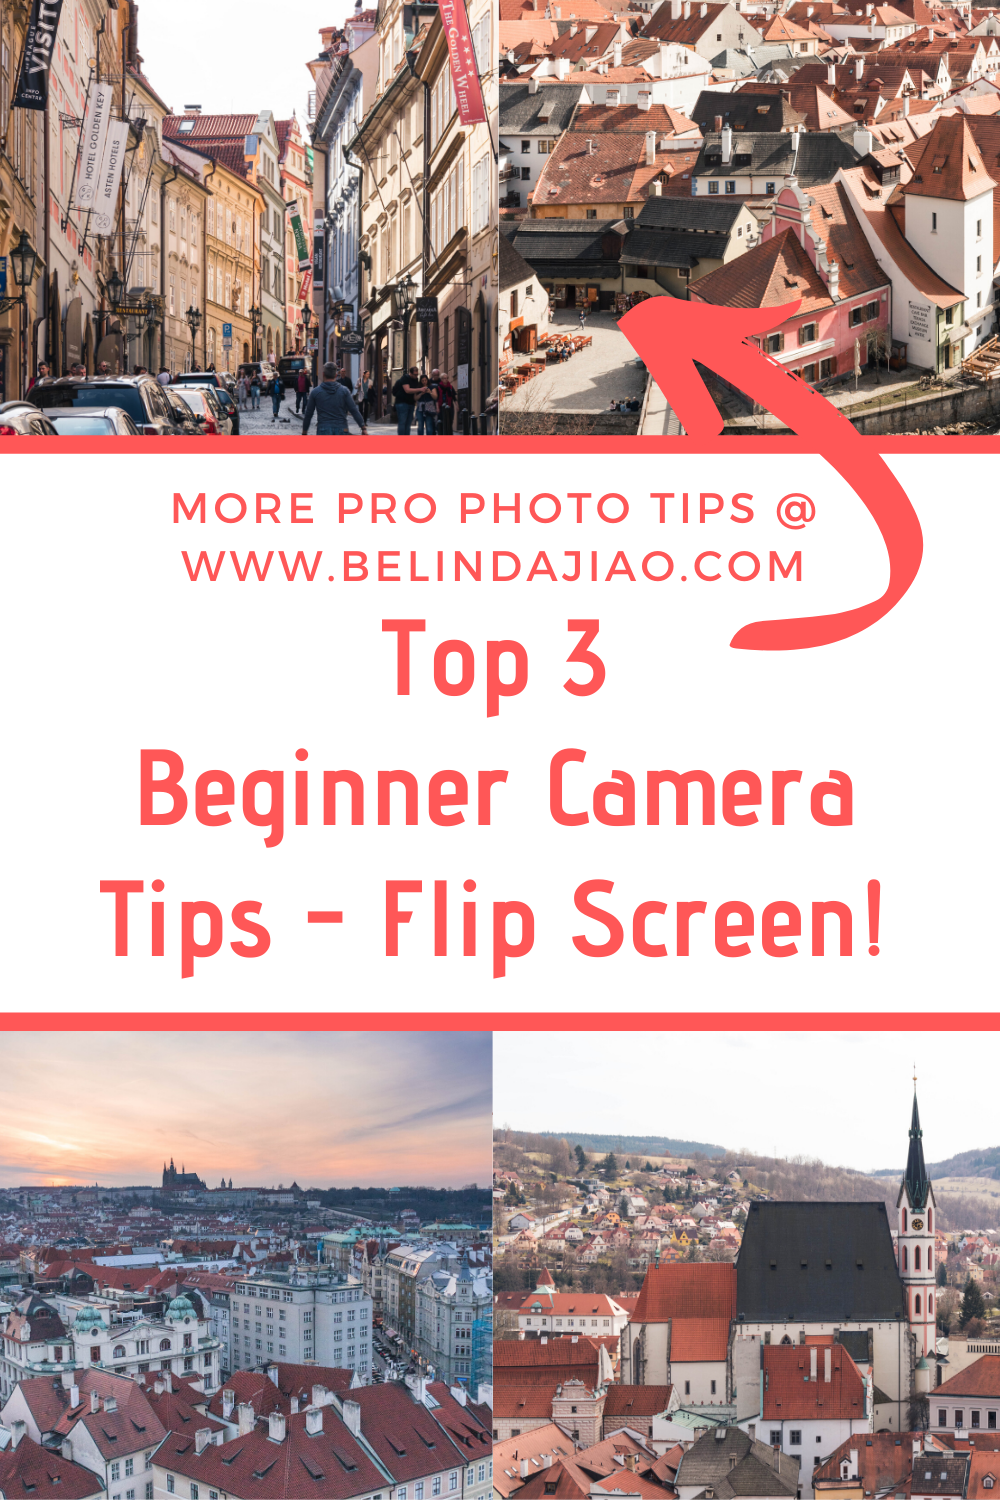 Top 3 Beginner Camera Tips - Flip Screen!.png